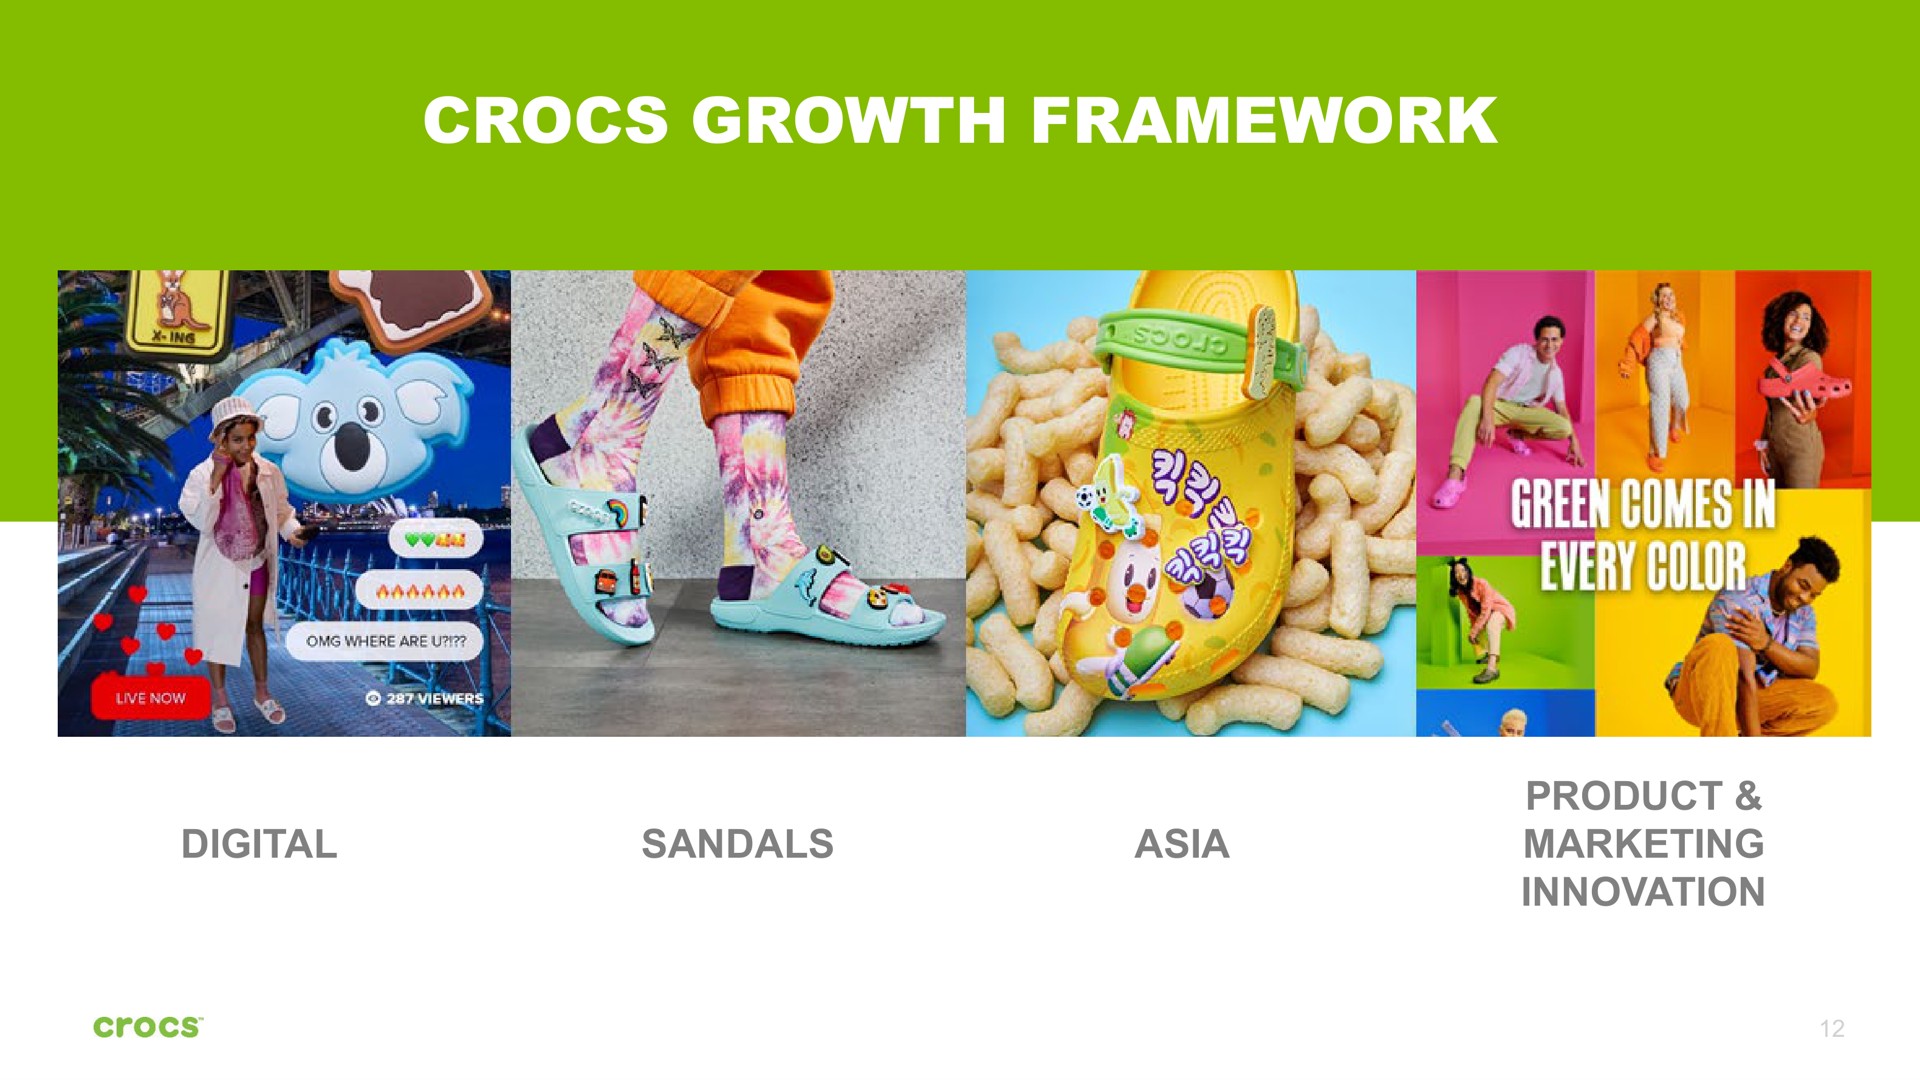 growth framework digital sandals product marketing innovation | Crocs